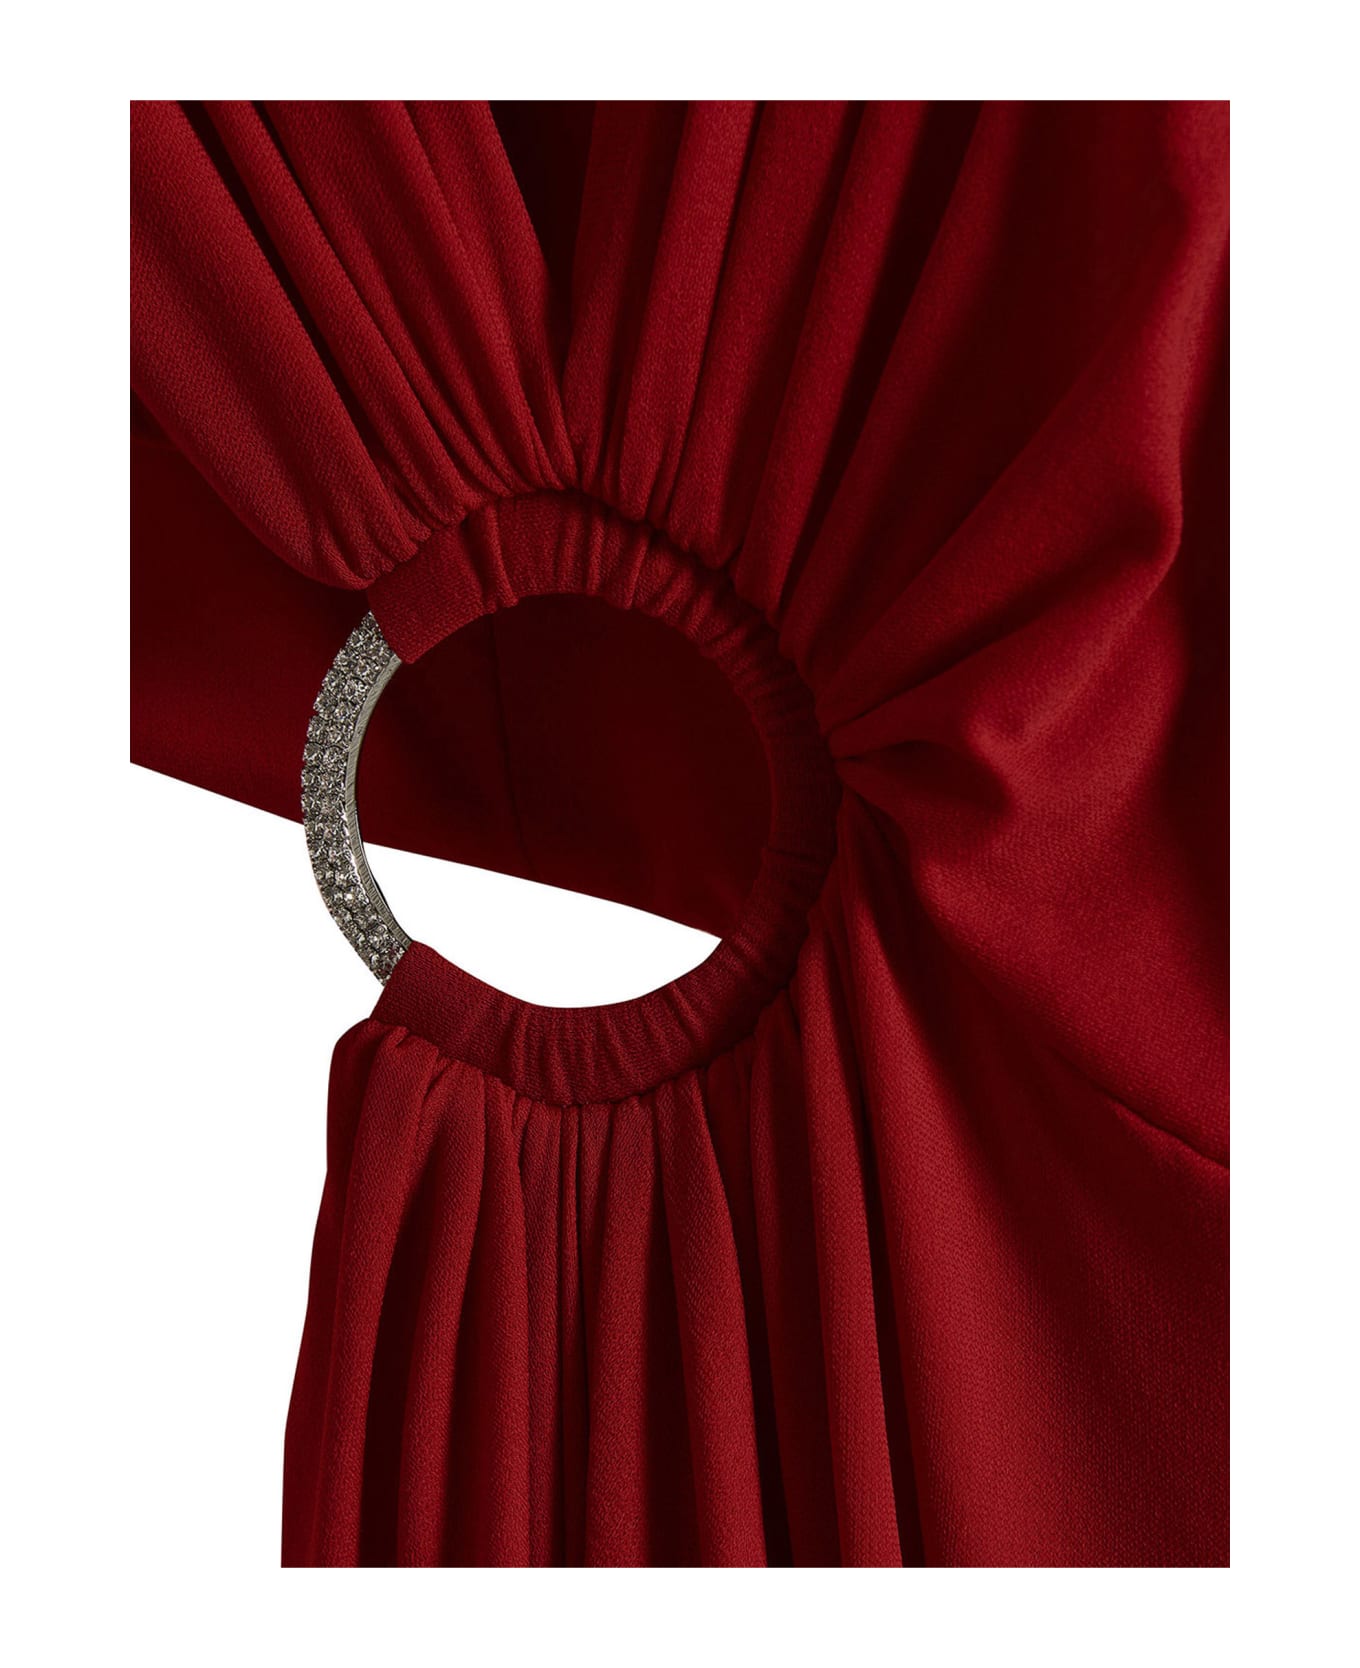 Alexandre Vauthier Cut-out Long Dress - Daring Red